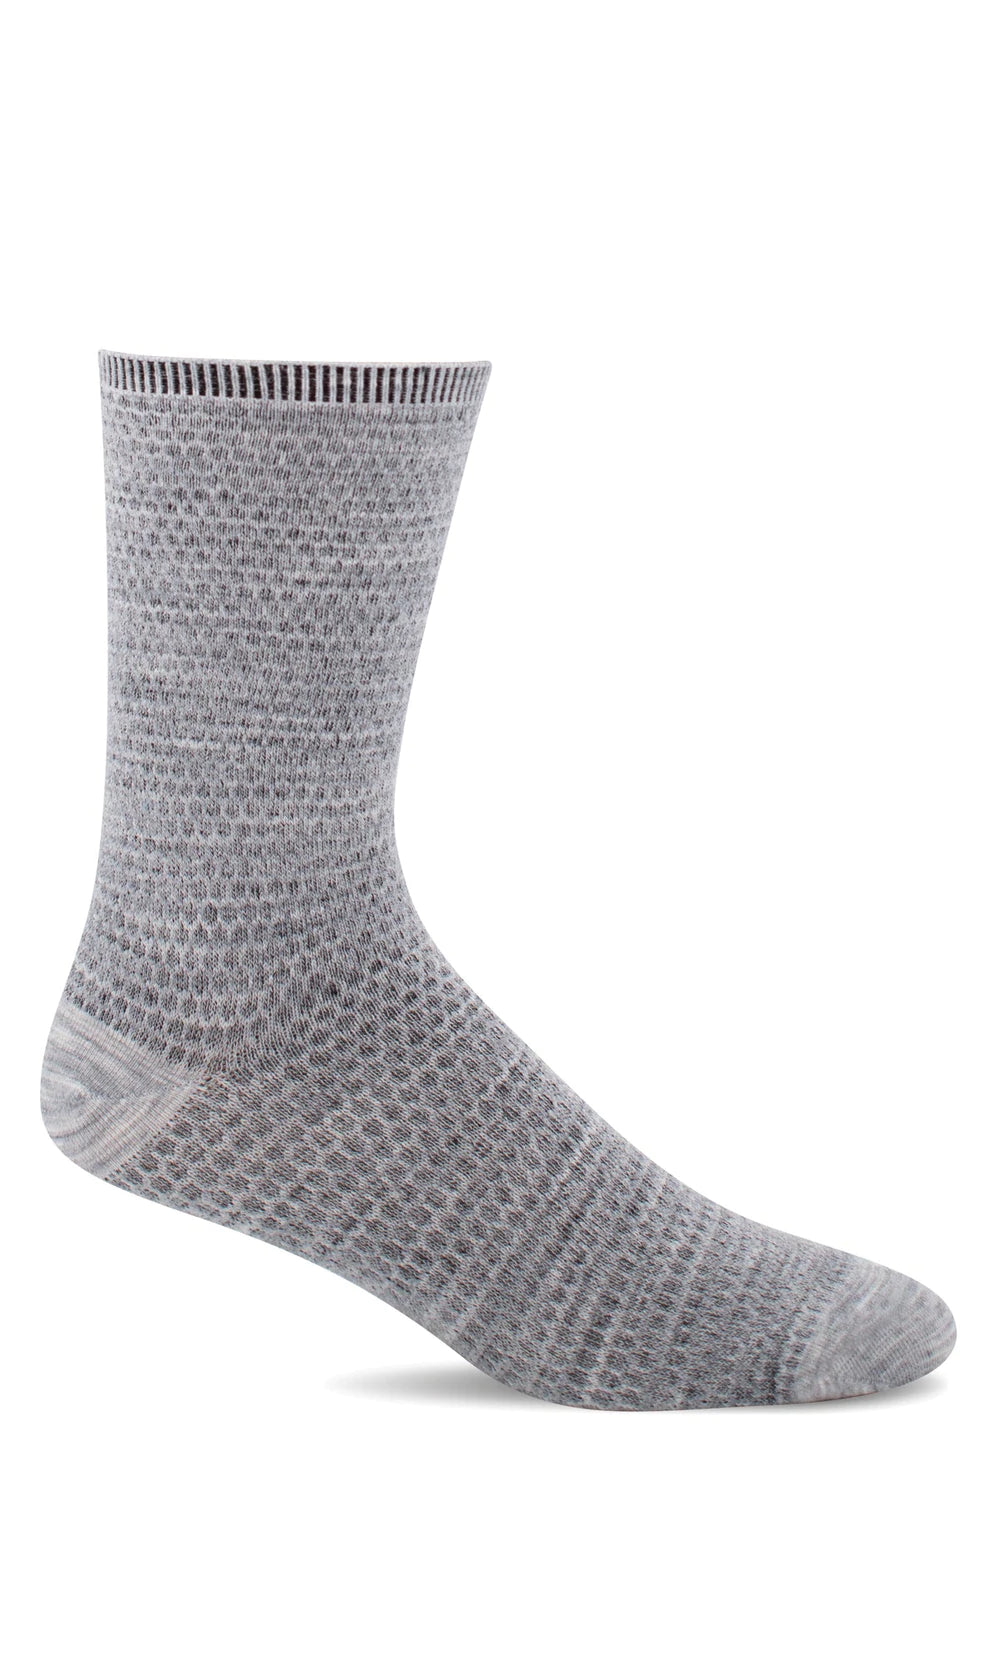 Wabi Sabi Grey Casual Sock (Women's size scale)